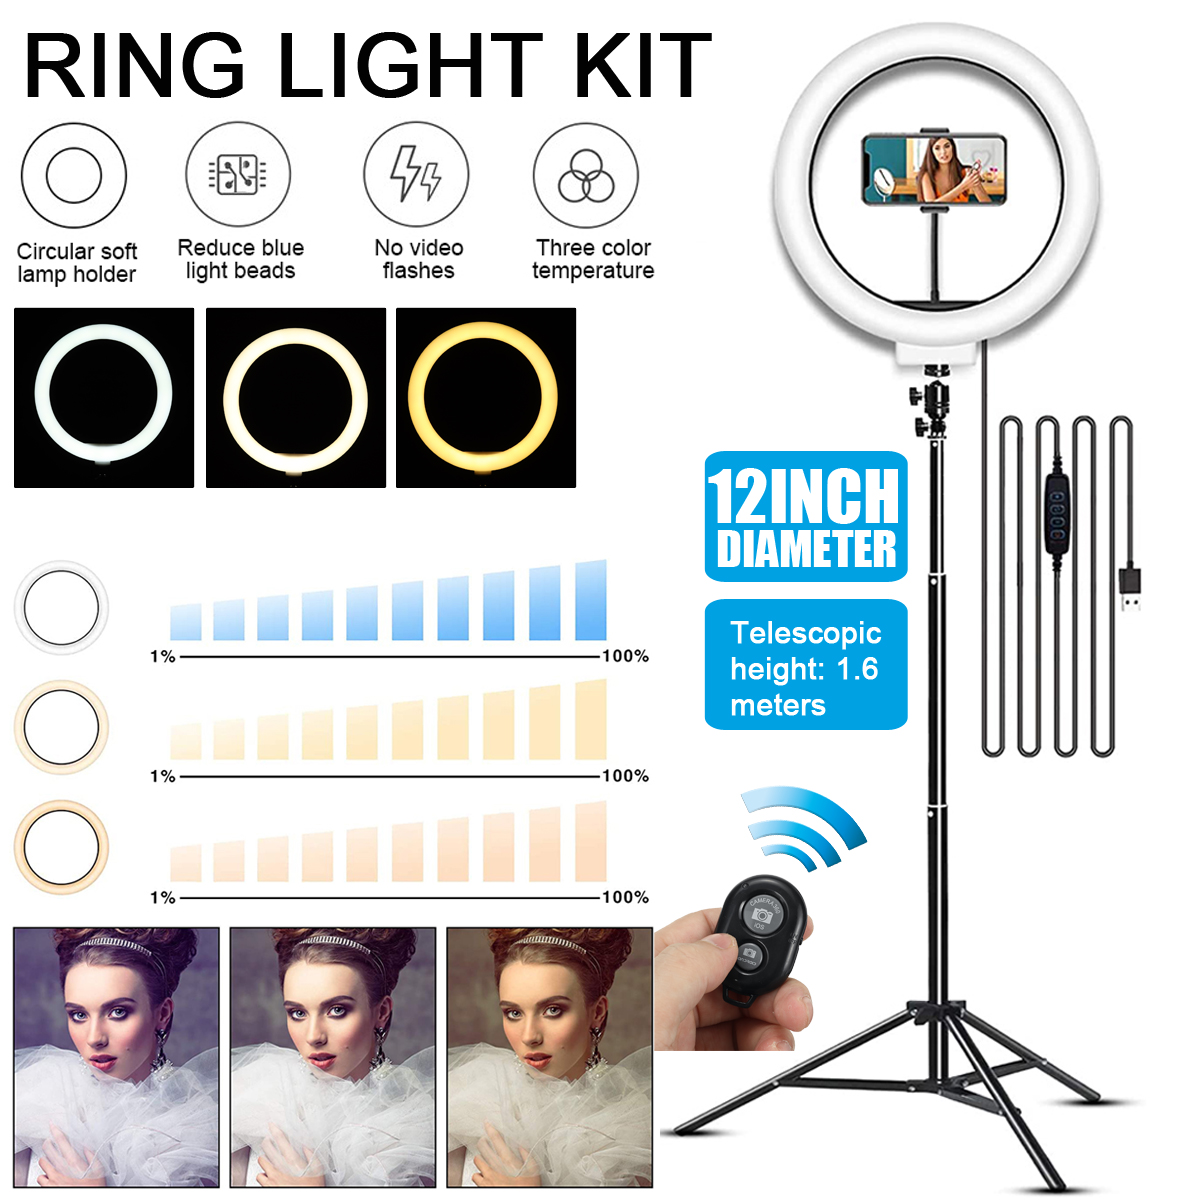 2800-7200K 360° turn to the head Ring Light Kit